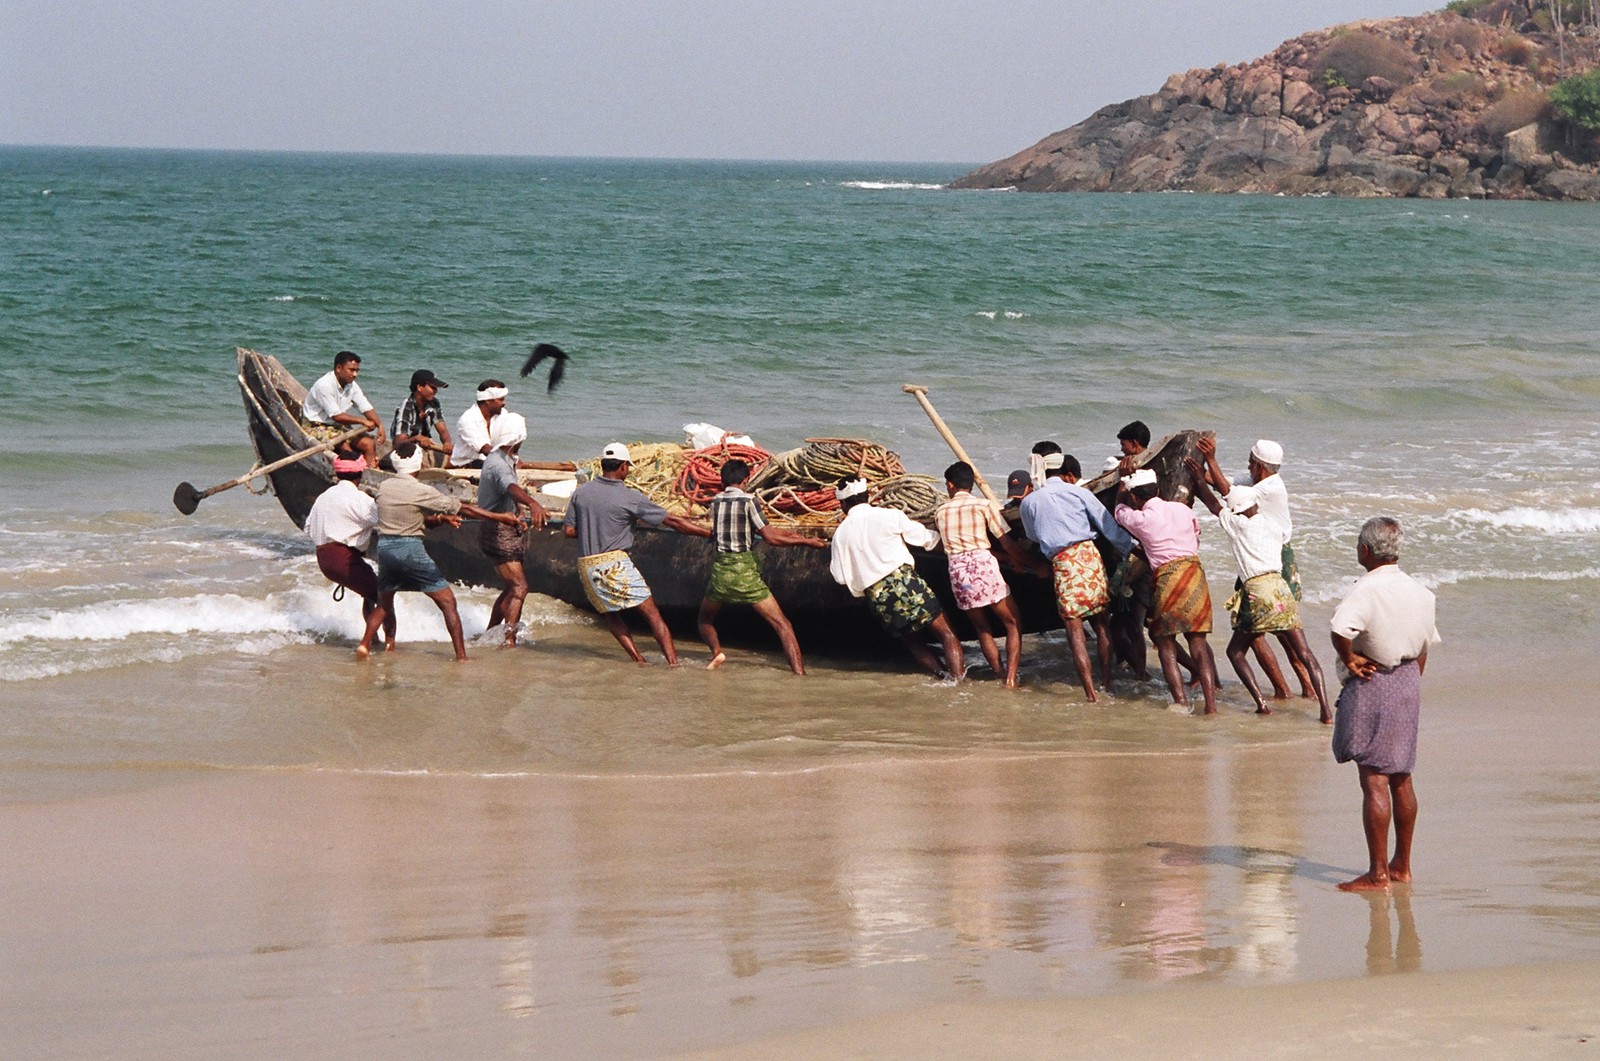 Fishermen launching their boat